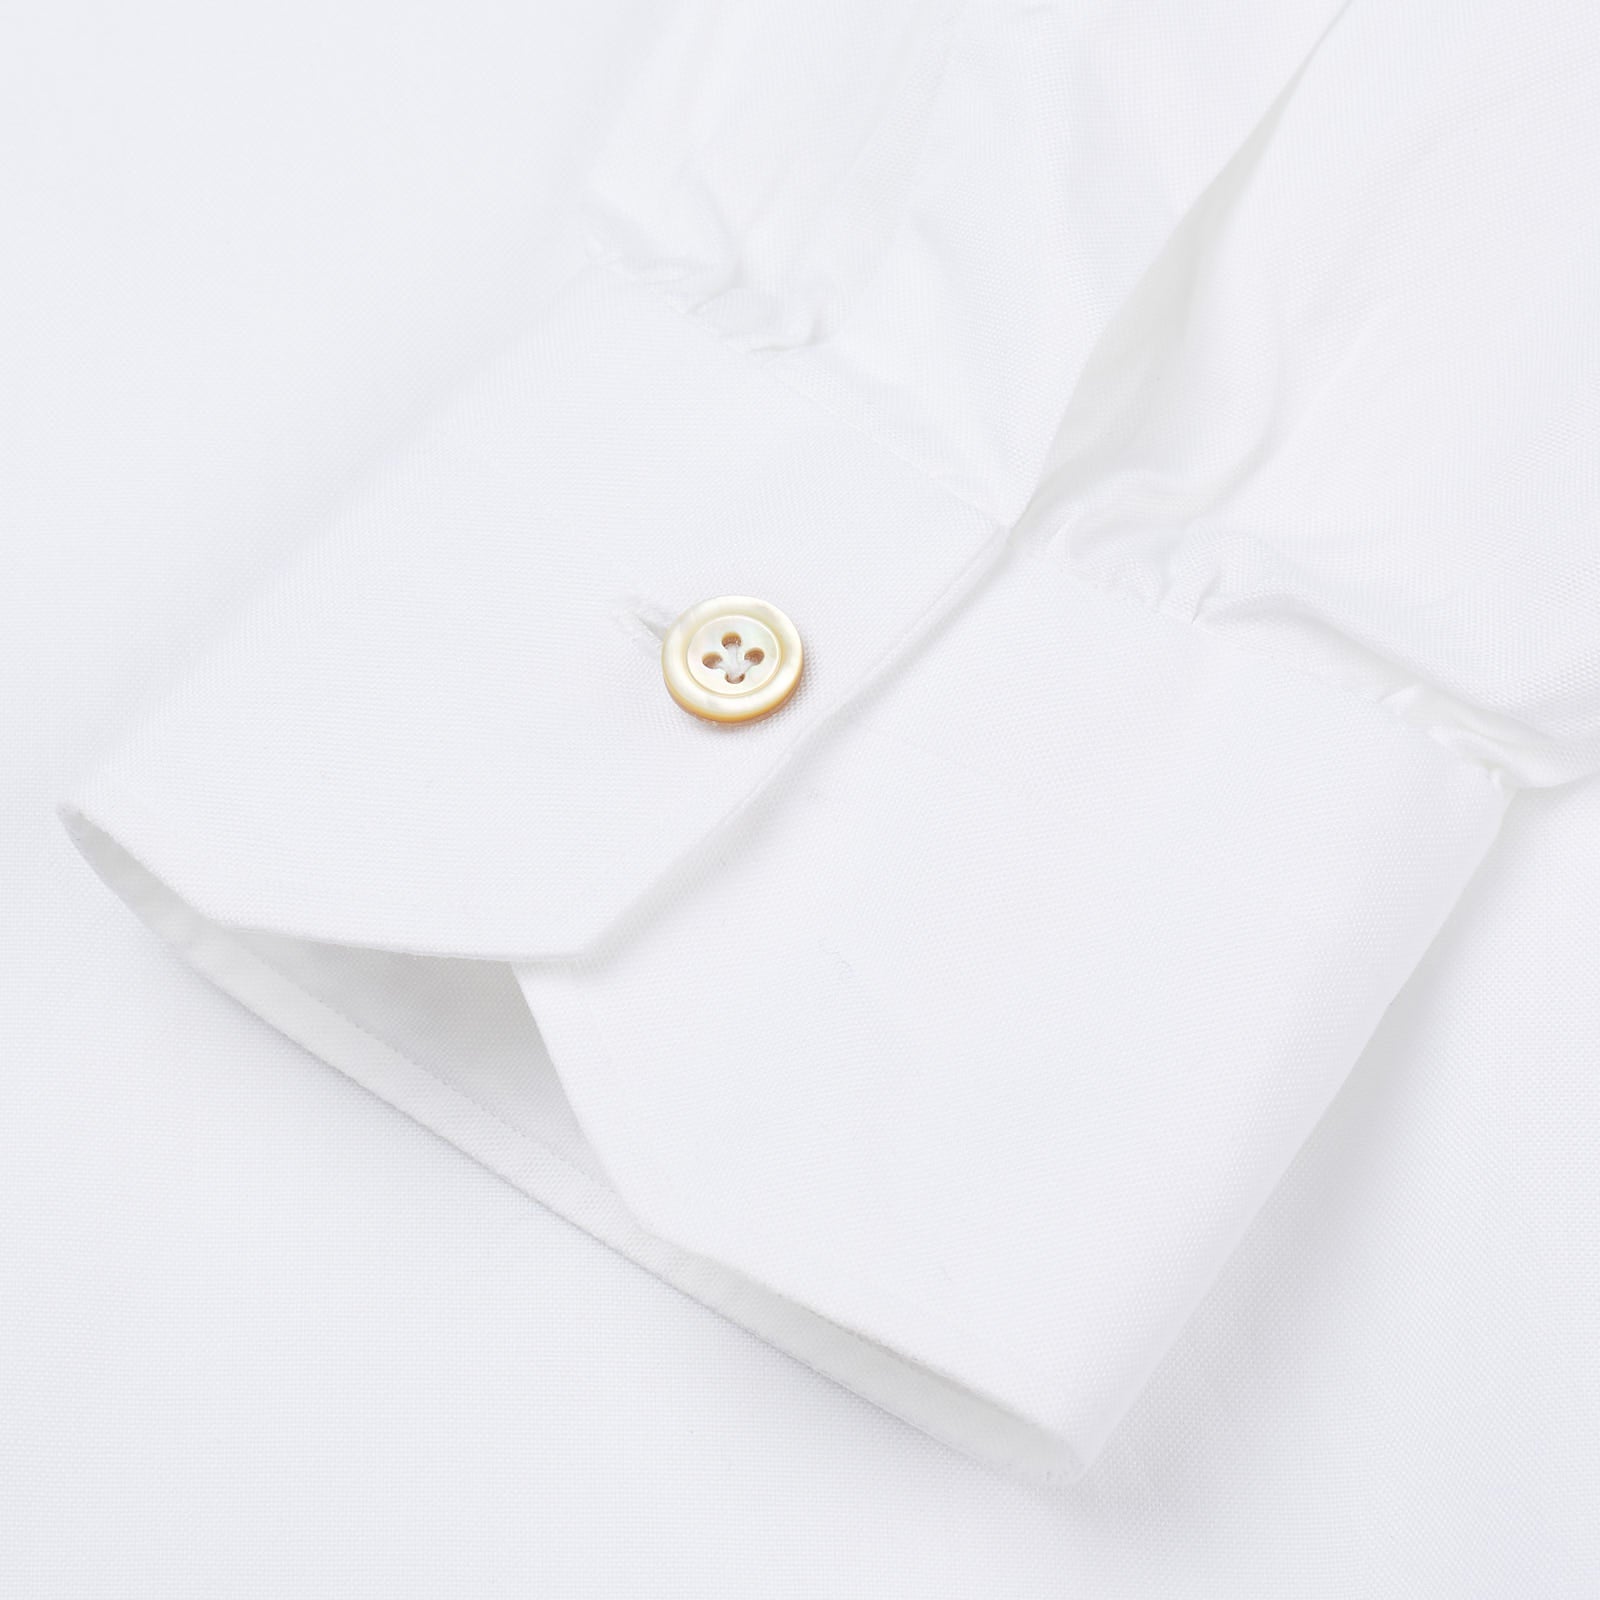 KITON Napoli Handmade Bespoke White Broadcloth Cotton Dress Shirt EU 39 US 15.5 KITON